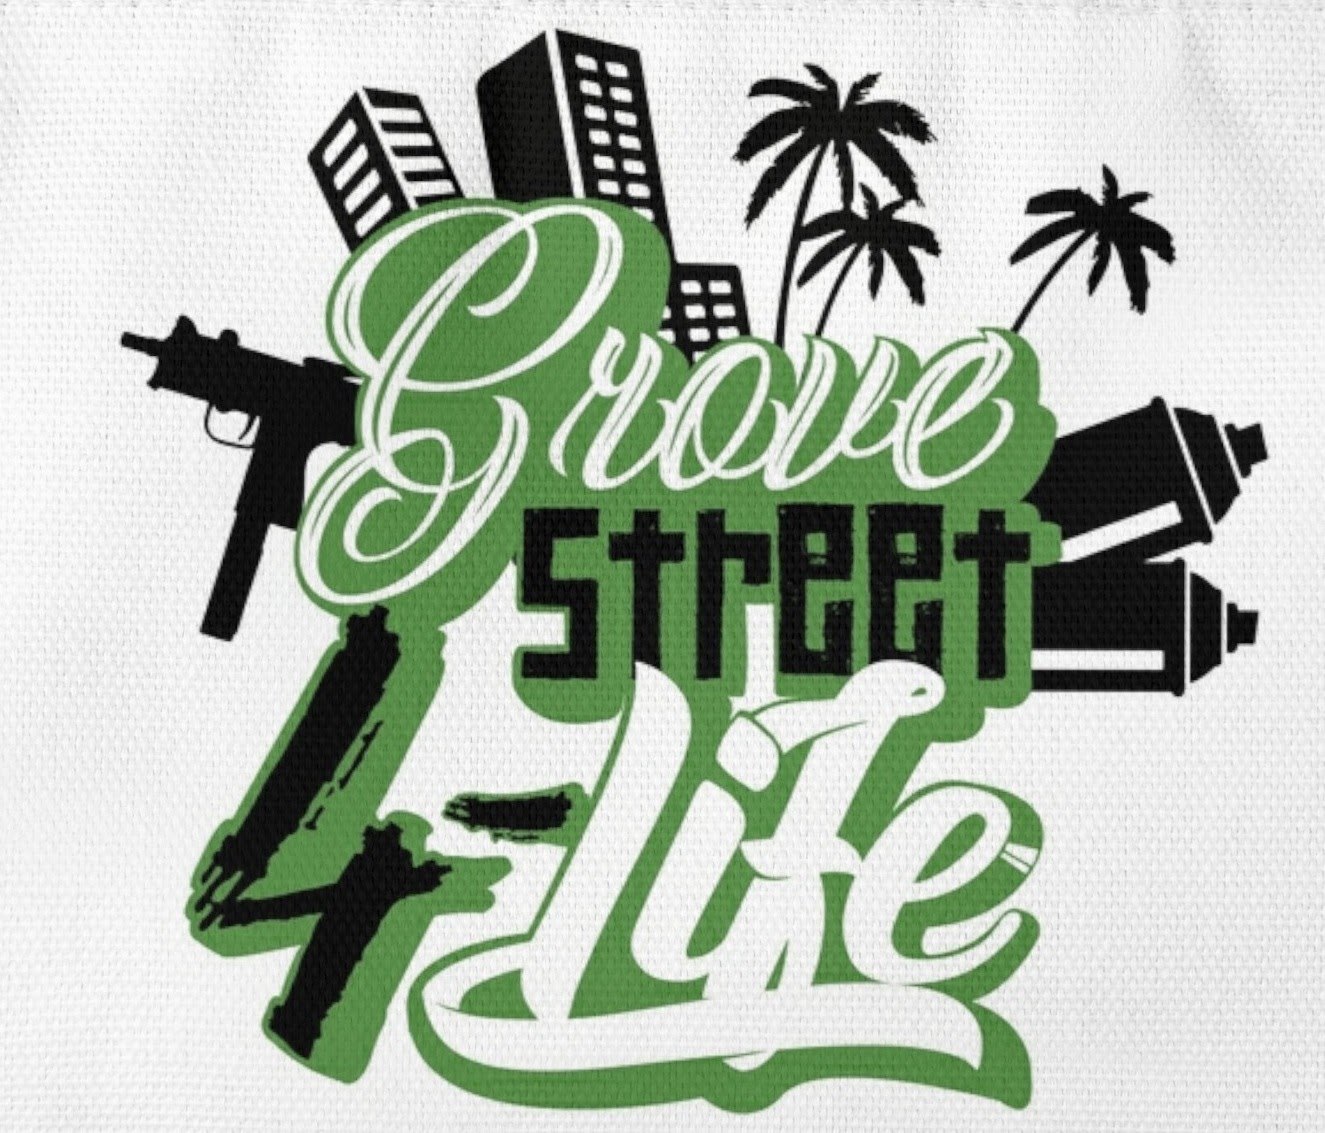 Street life 4. Grove St 4 Life граффити. Grove Street 4 Life граффити. Эмблема банды Гроув стрит.